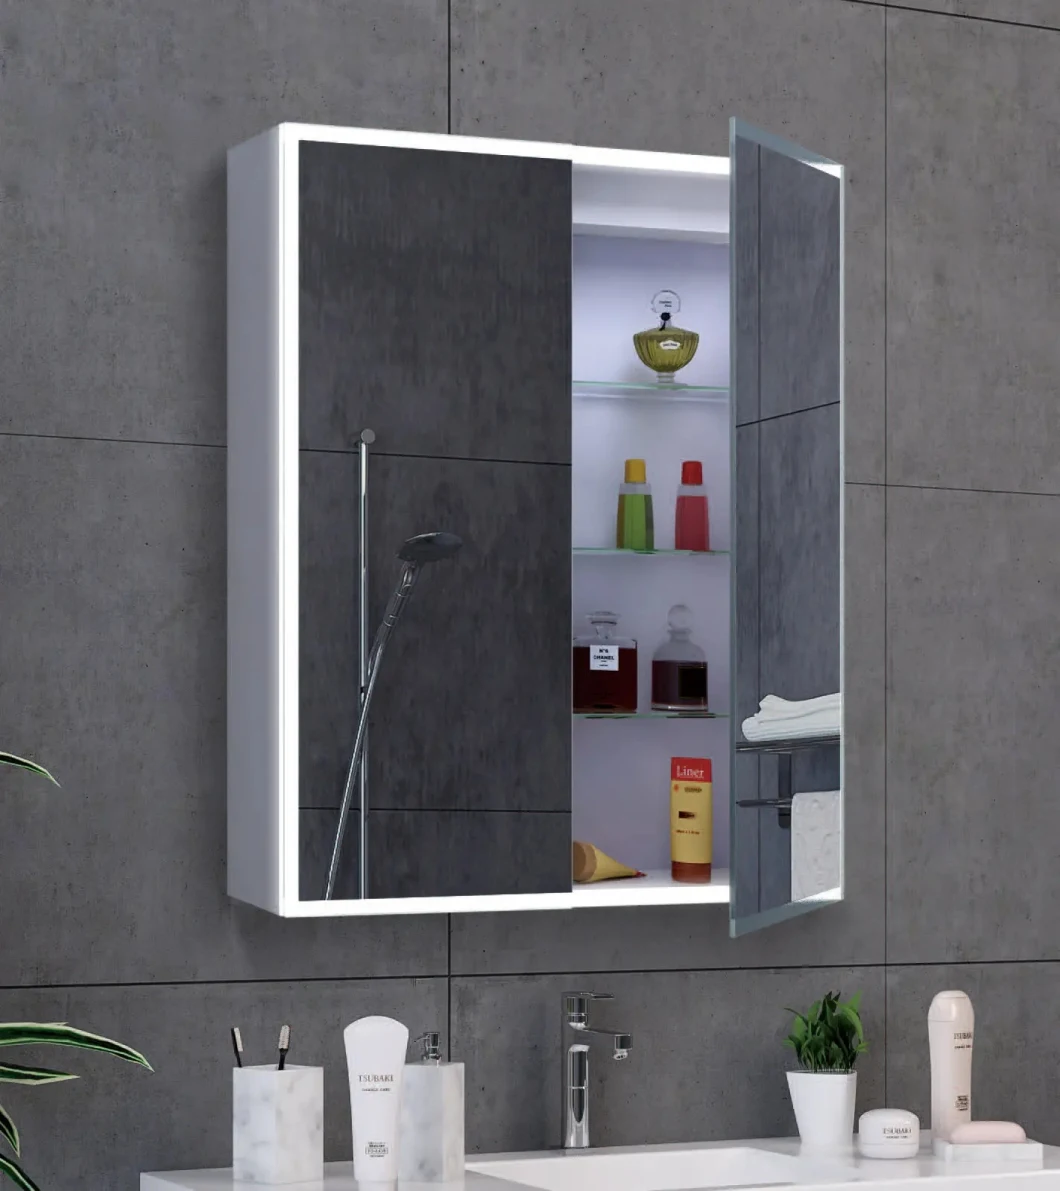 Hot Sale Hotel Design Wholesale LED Bathroom Manufacturer Vanity Dressing Mirror Bath LED Illuminated Smart Lighted Mirror Cabinet